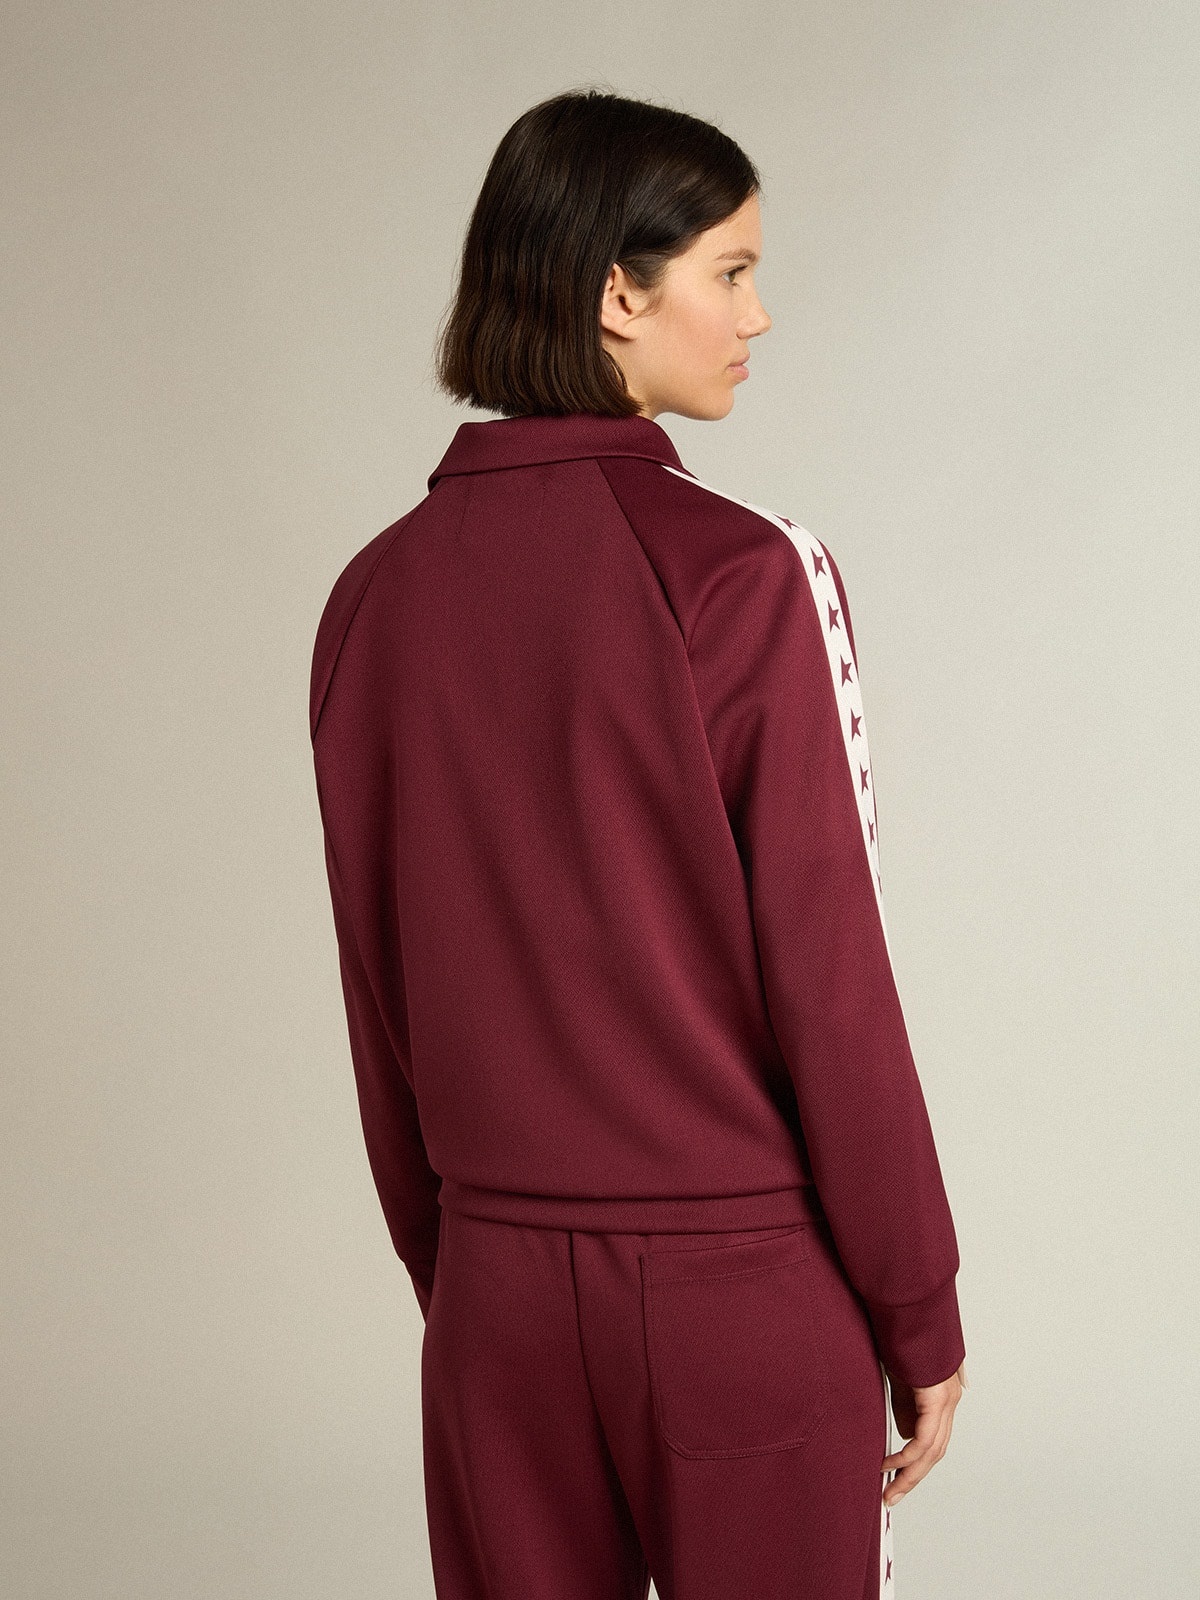 Women’s burgundy zipped sweatshirt with white strip and contrasting stars - 4